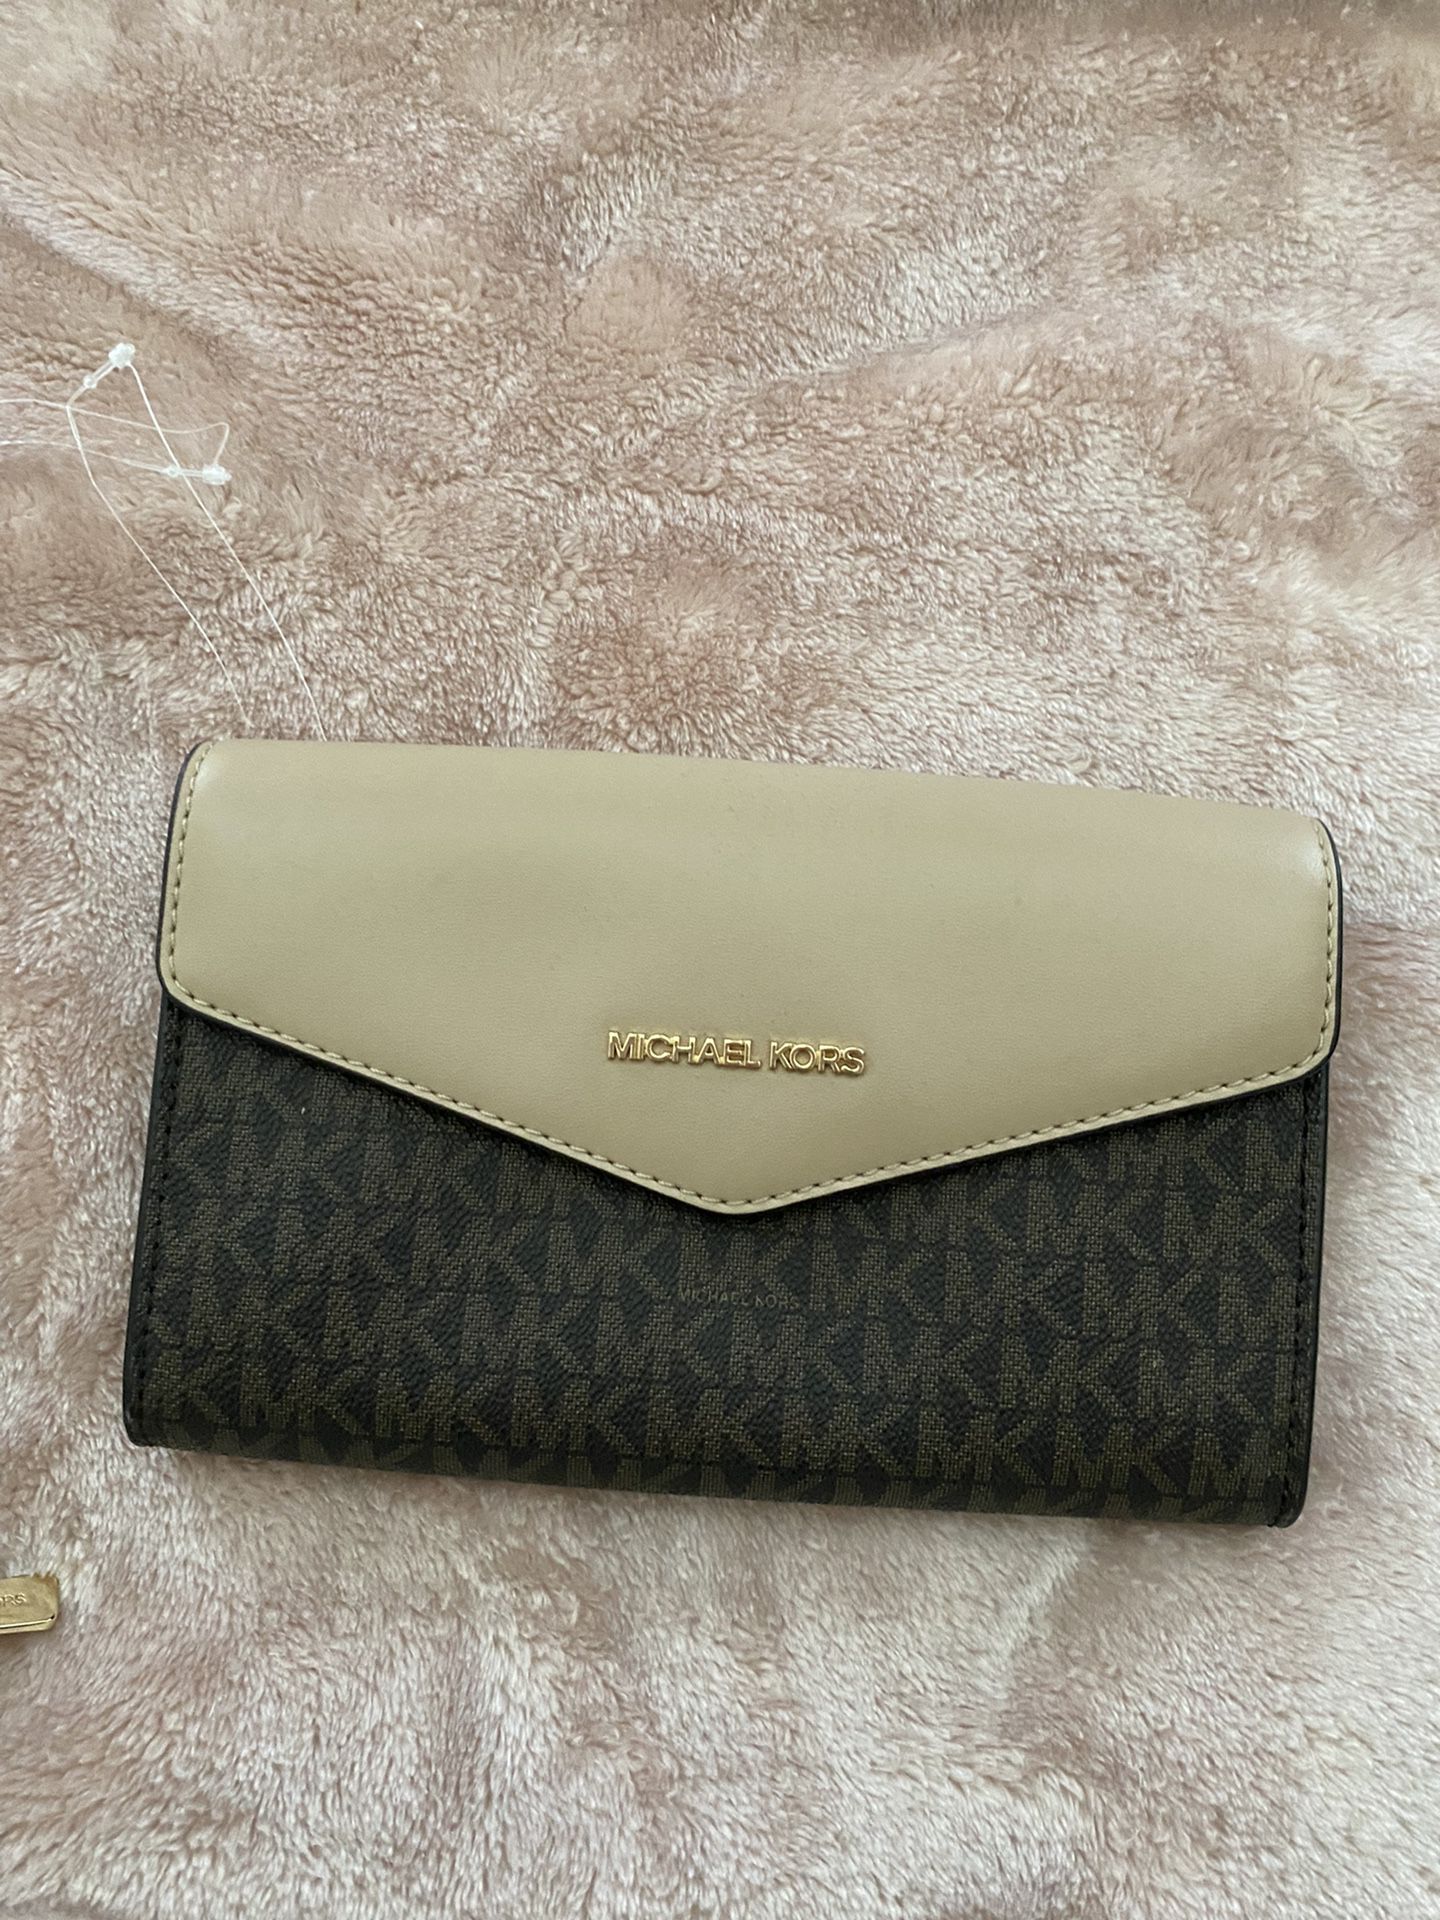 Michael Kors wallet/small purse